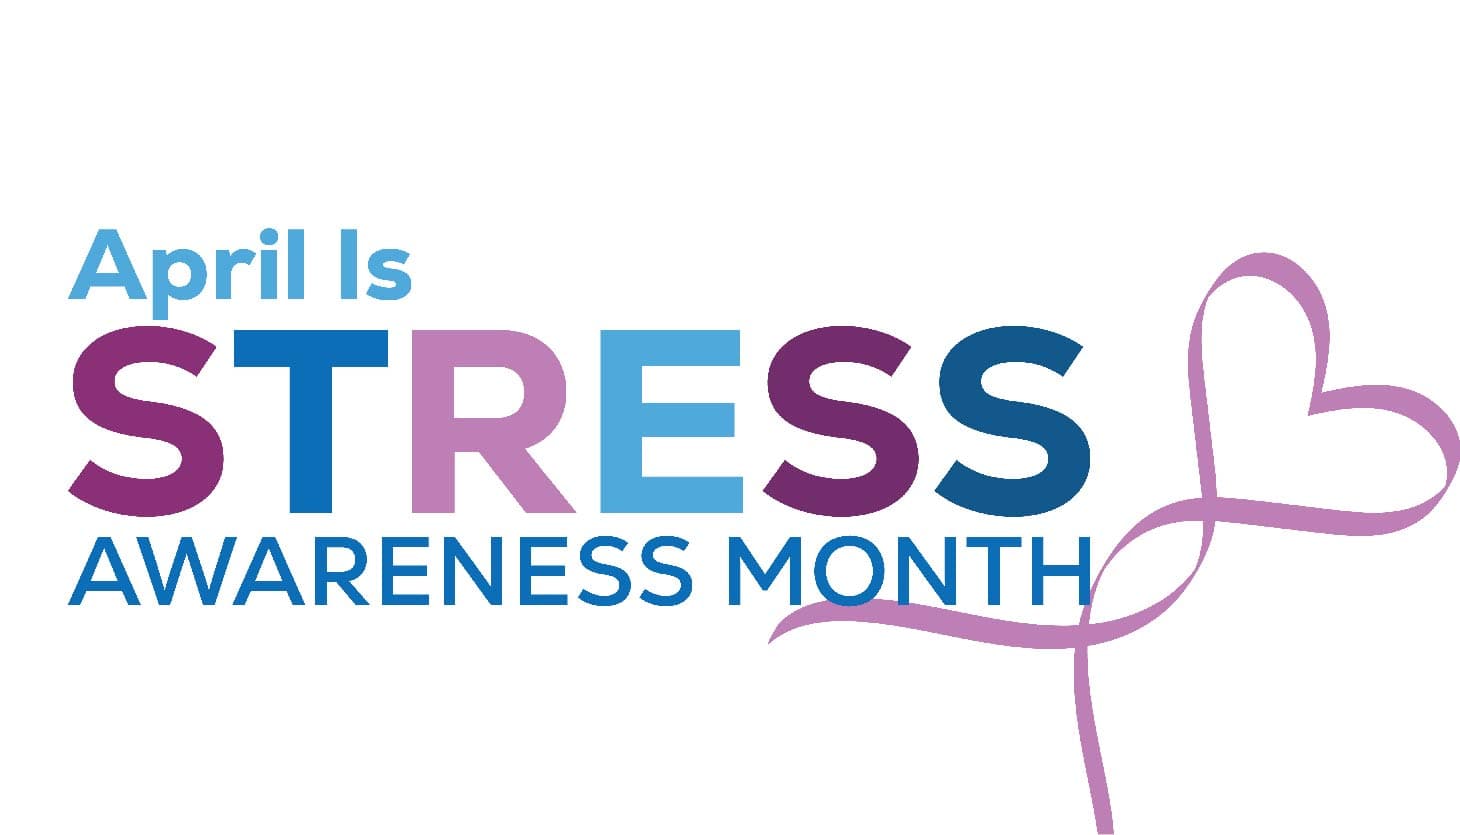 Article > Stress Awareness month